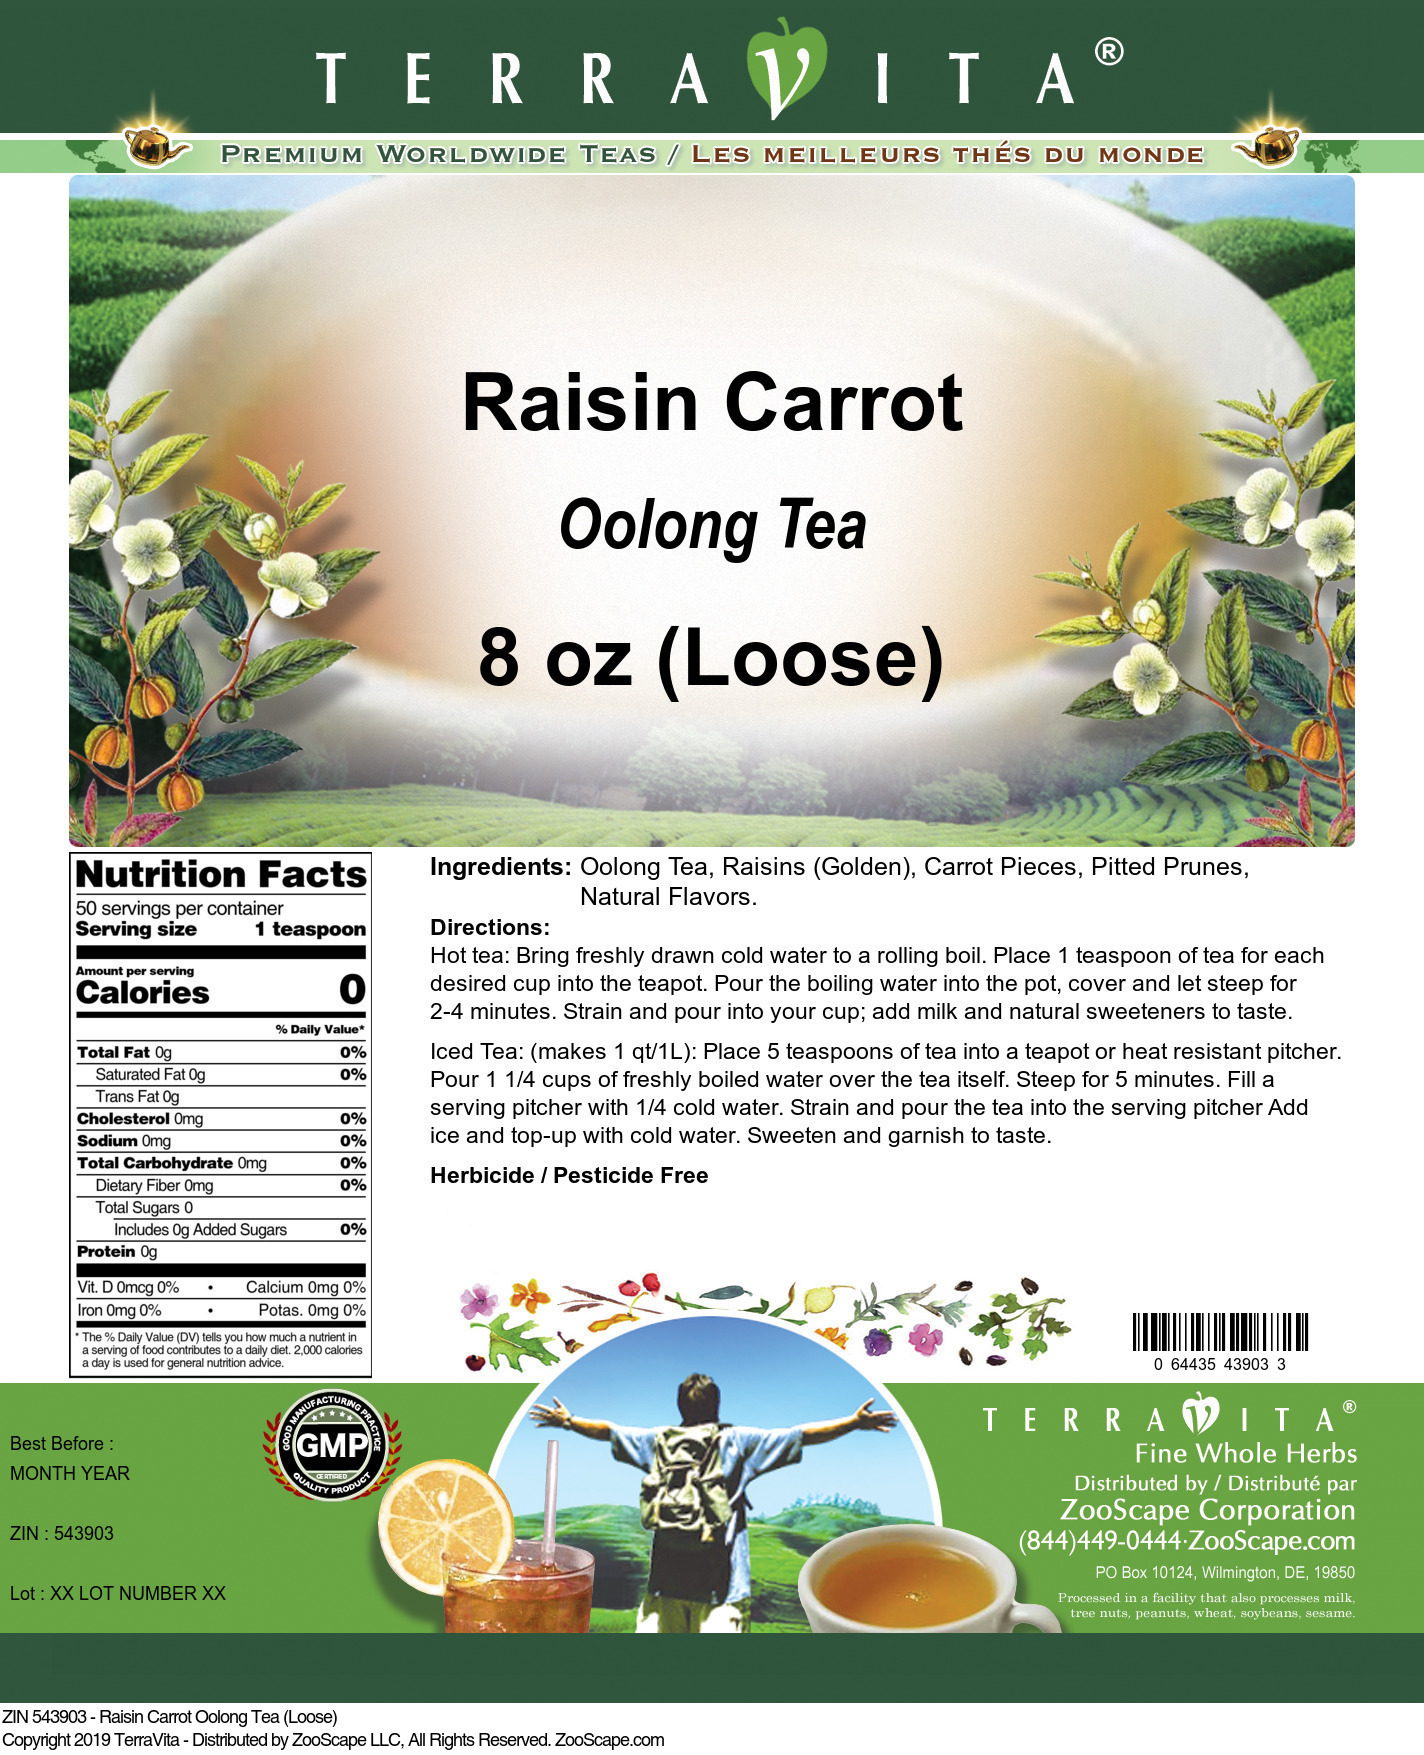 Raisin Carrot Oolong Tea (Loose) - Label